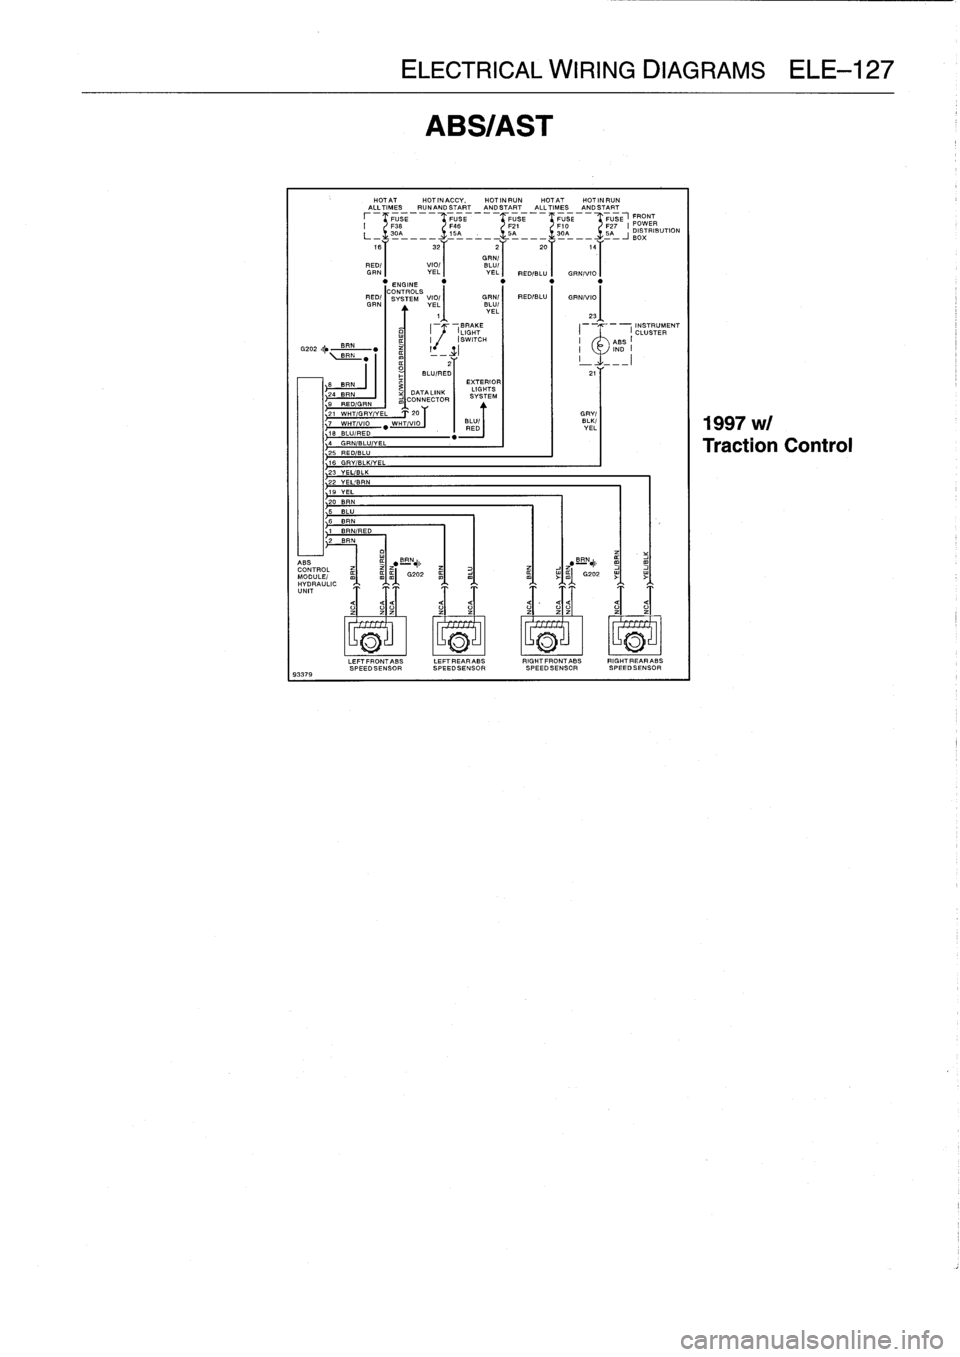 BMW 323i 1997 E36 Workshop Manual 
ASS
CONTROL
2
MODULE
HYDRAULIC
UNIT

93-

ELECTRICAL
WIRING
DIAGRAMS
ELE-127

ABS/AST

HOTAT
HOTINACCY,
HOTINRUN
HOTAT
HOTINRUN
ALLTIMES

	

RUN
AND
START

	

ANDSTART

	

ALLTIMES

	

ANDSTART
FUSE
